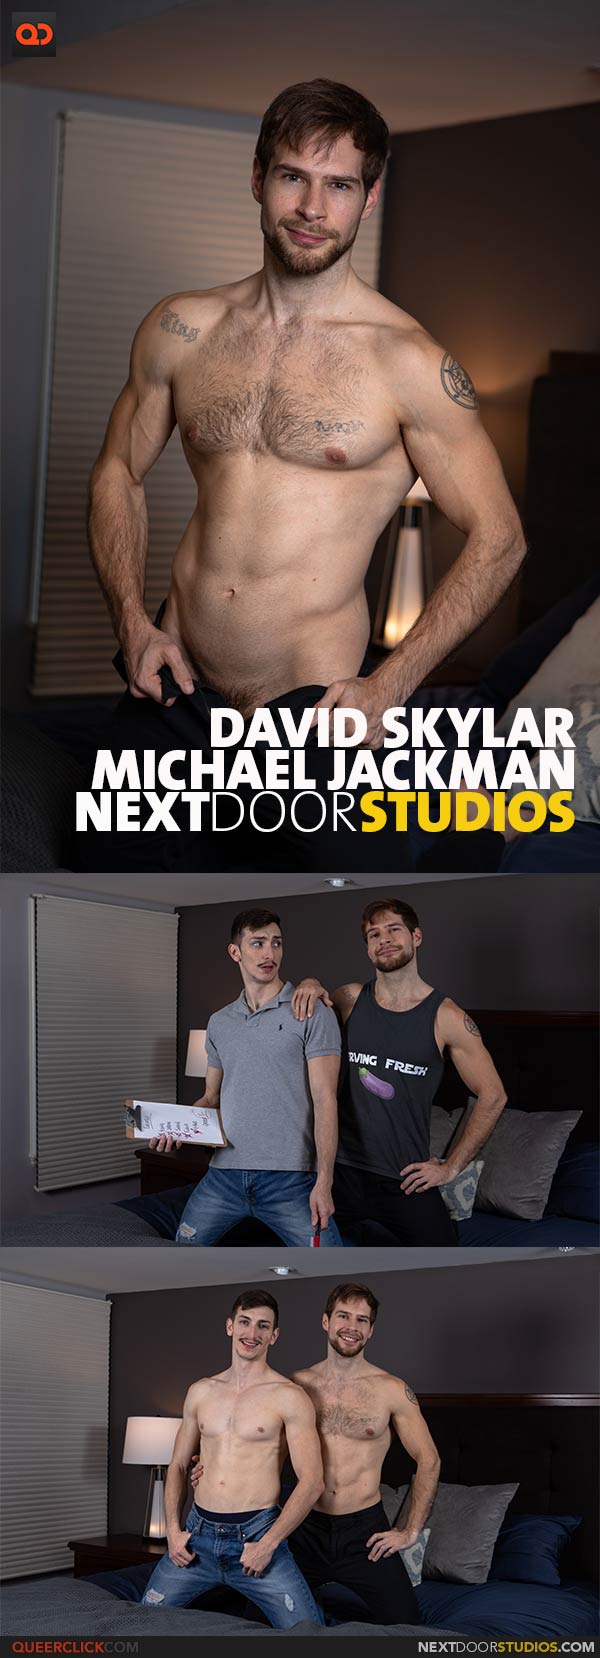 NextDoorStudios: Michael Jackman and David Skylar